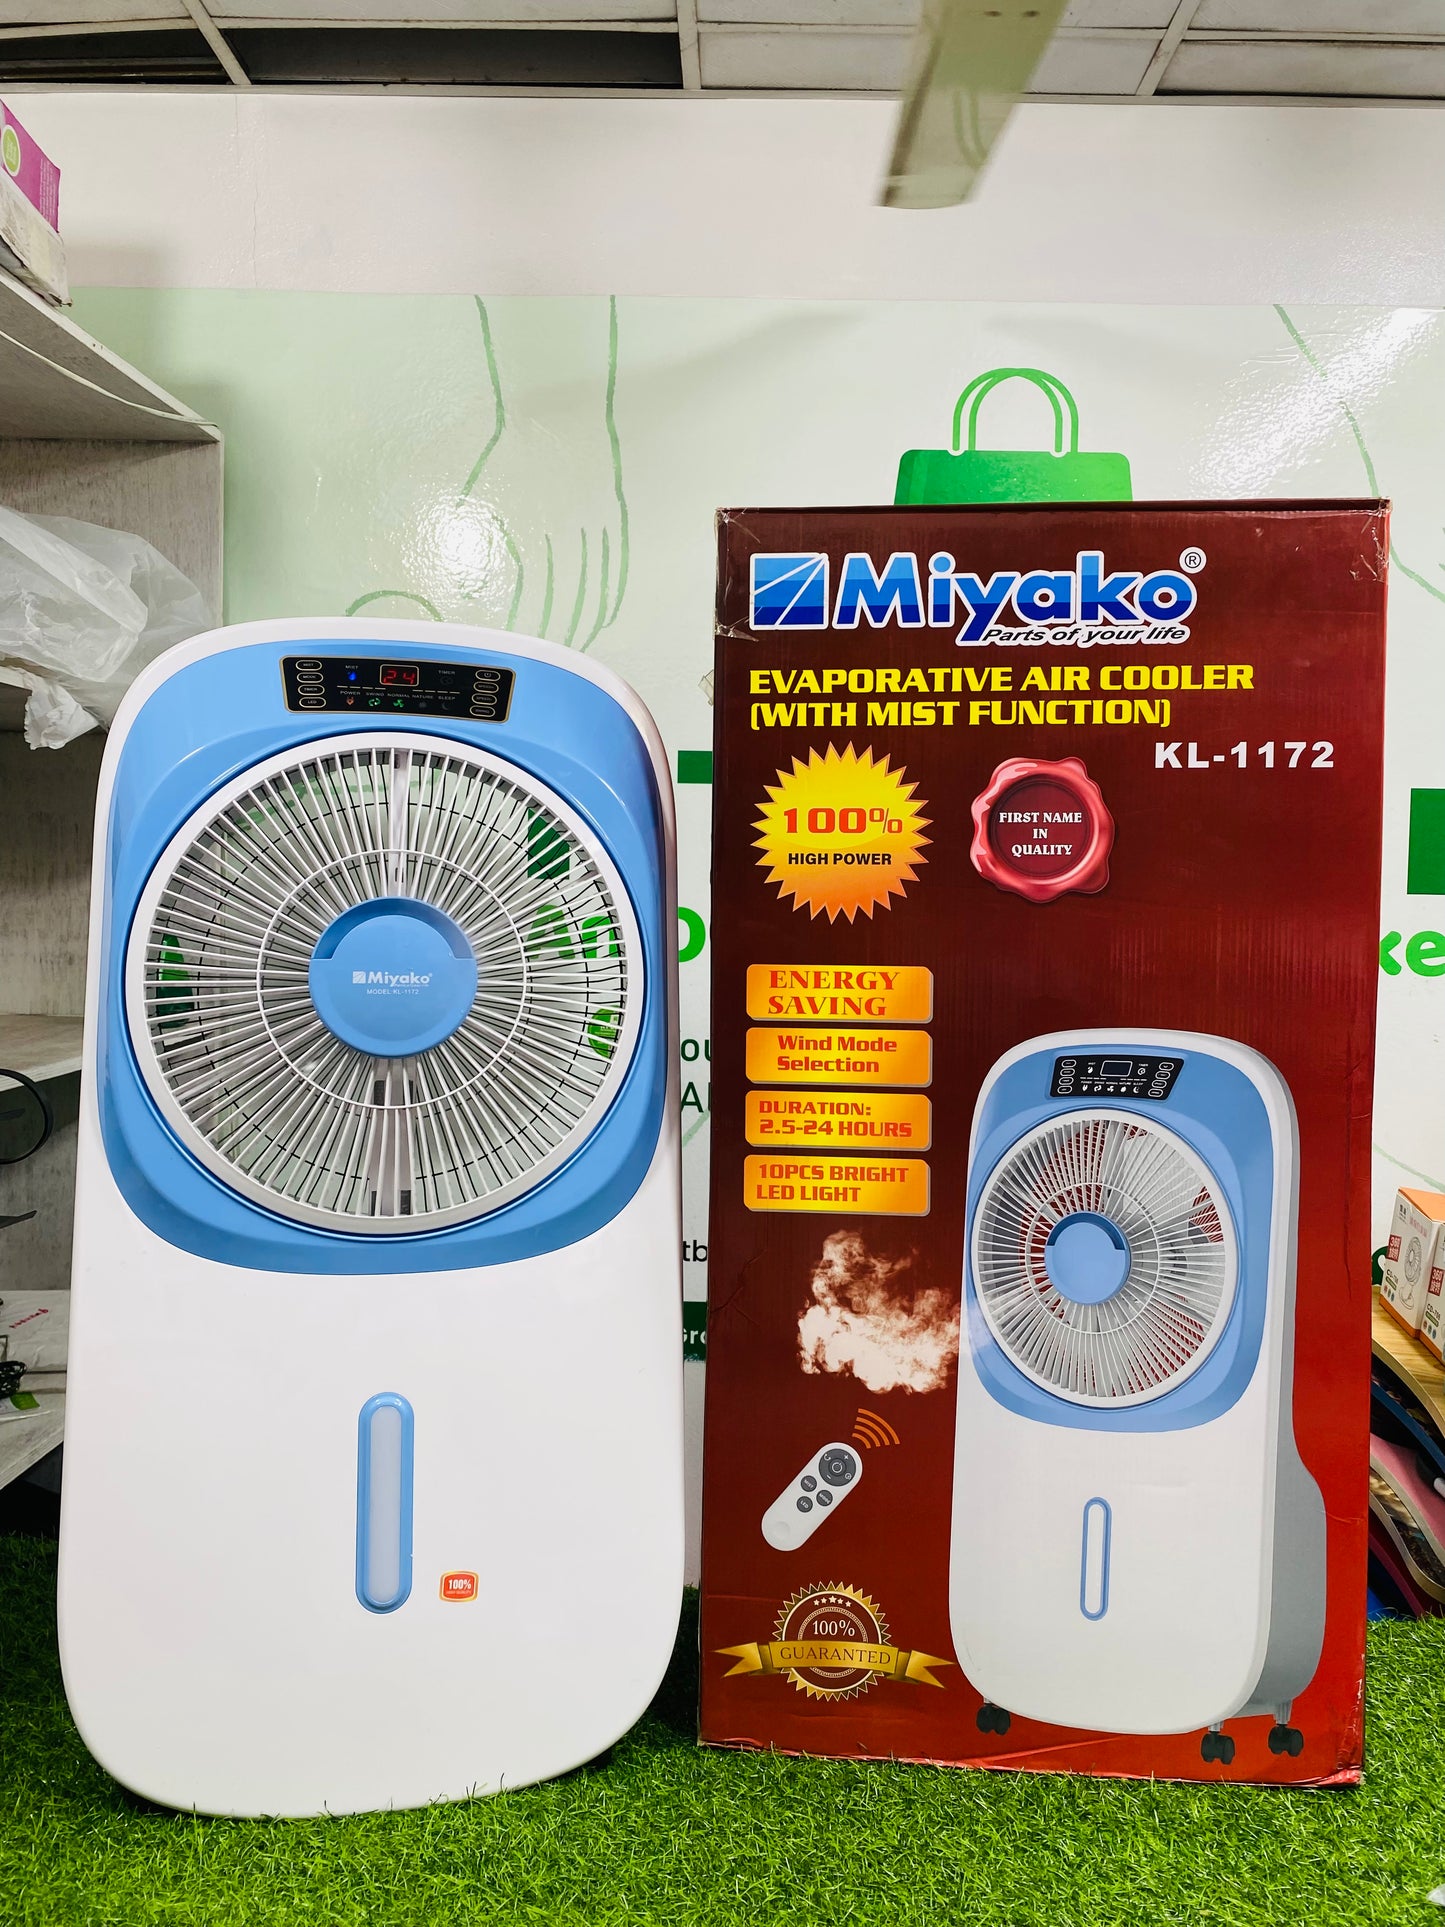 Miyako evaporative air cooler with mist function - HT Bazar